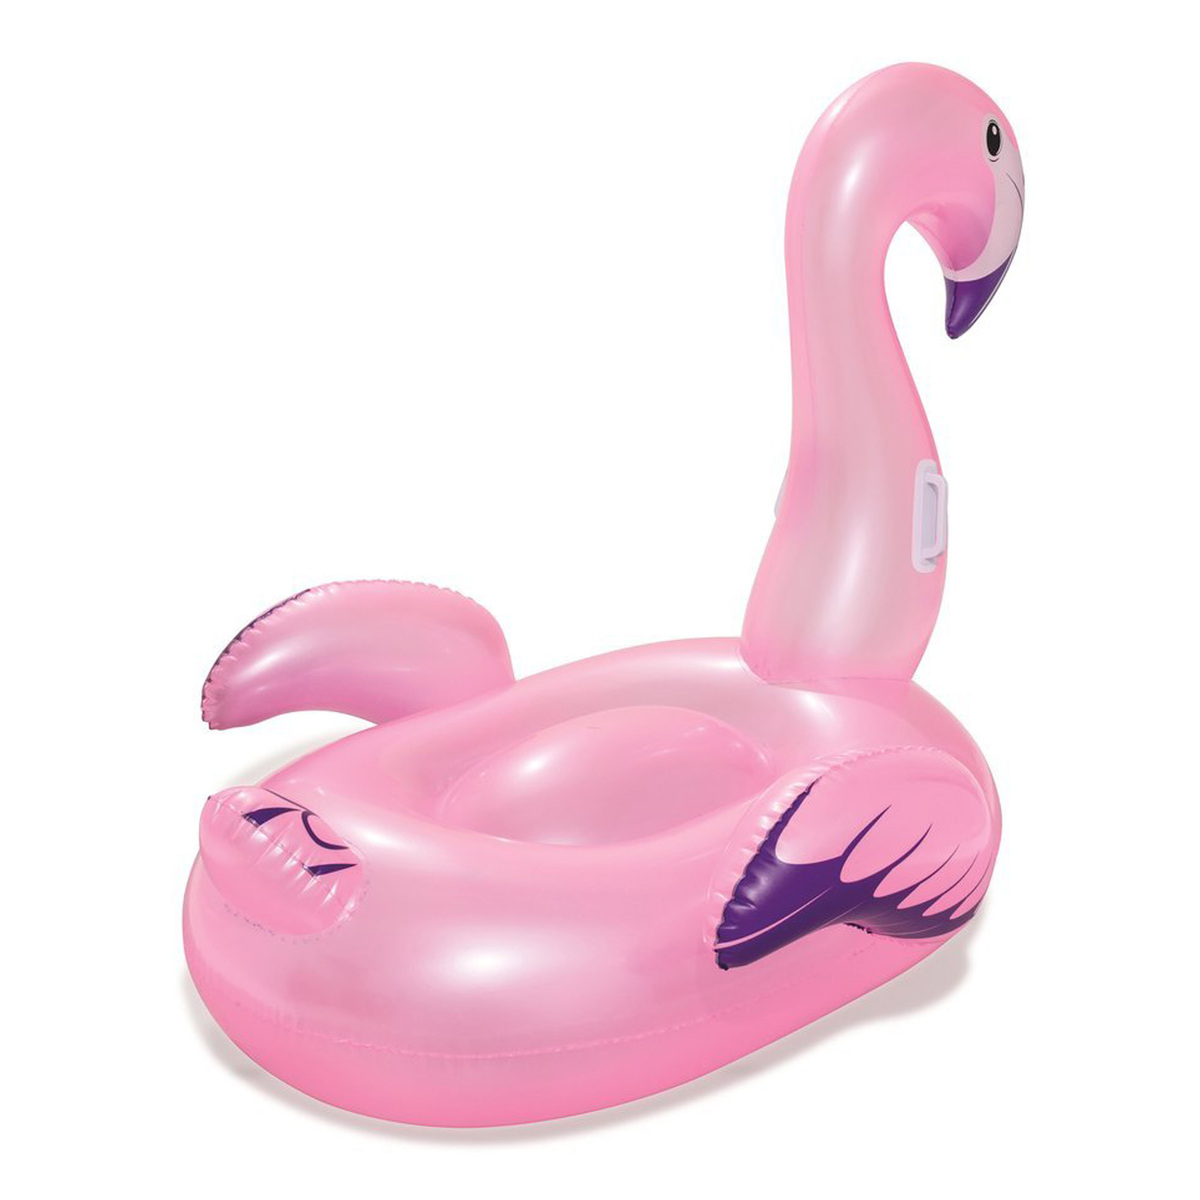 Bestway Inflatable Flamingo Pool Ride-On, 41122